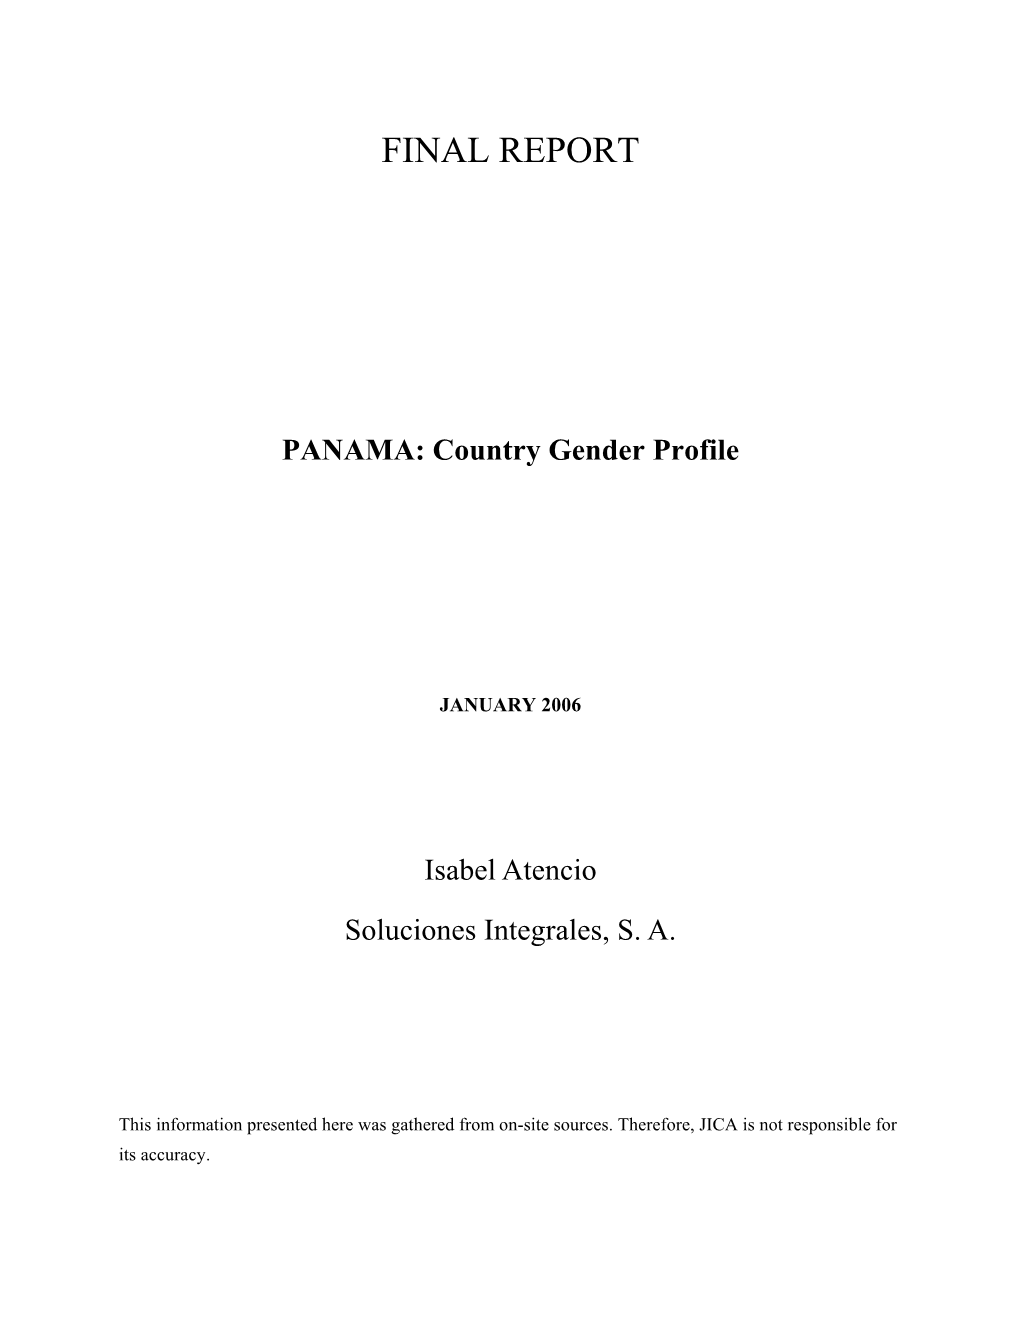 PANAMA: Country Gender Profile